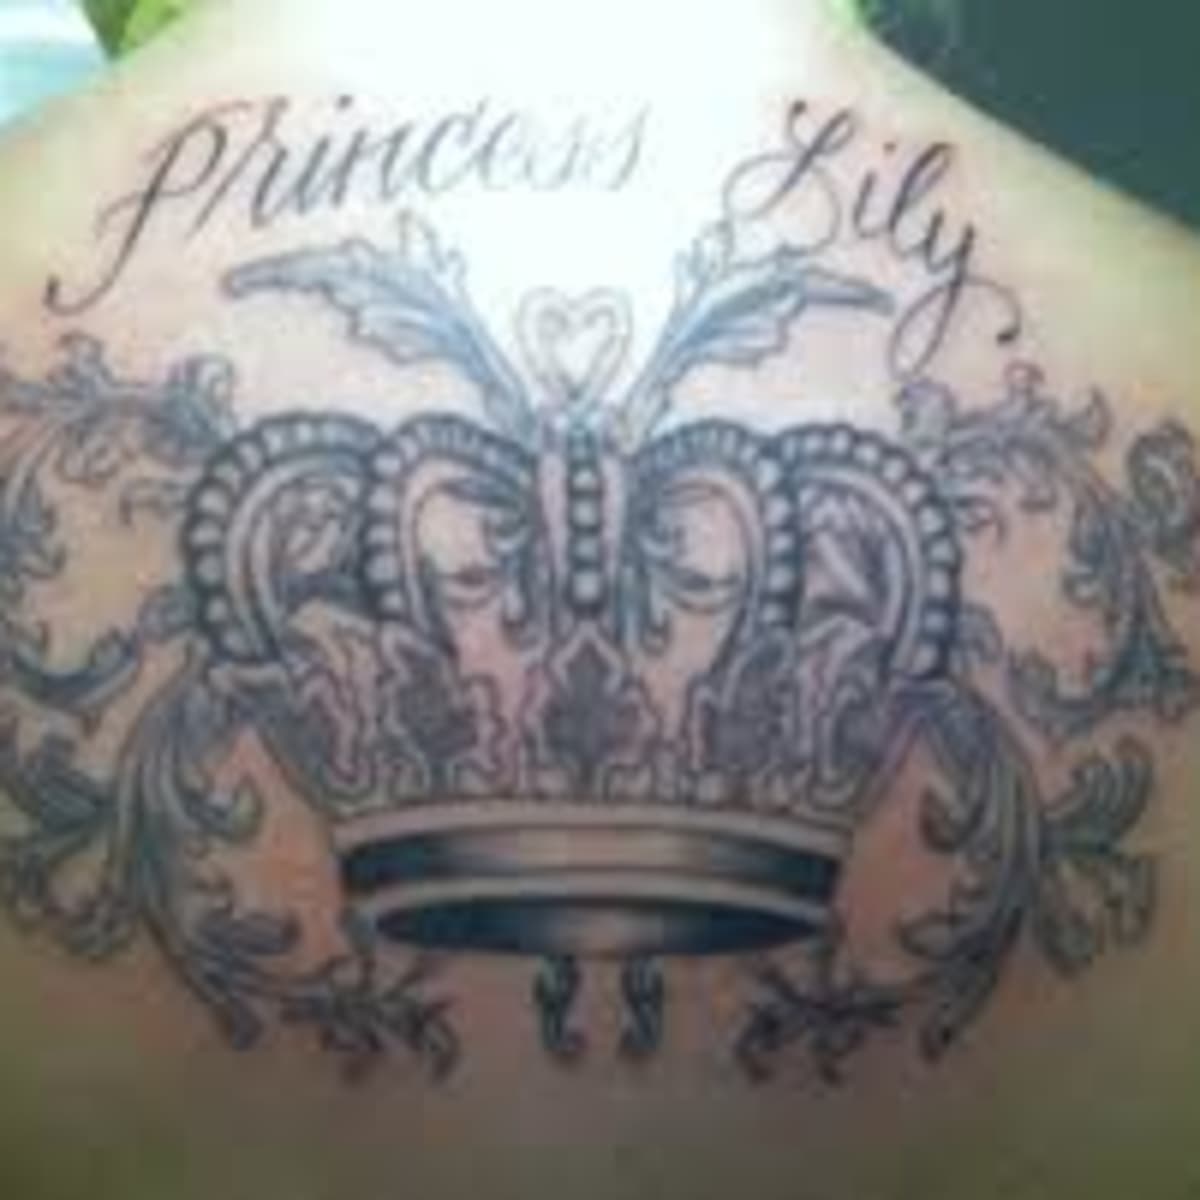 kings crown tattoo tribal